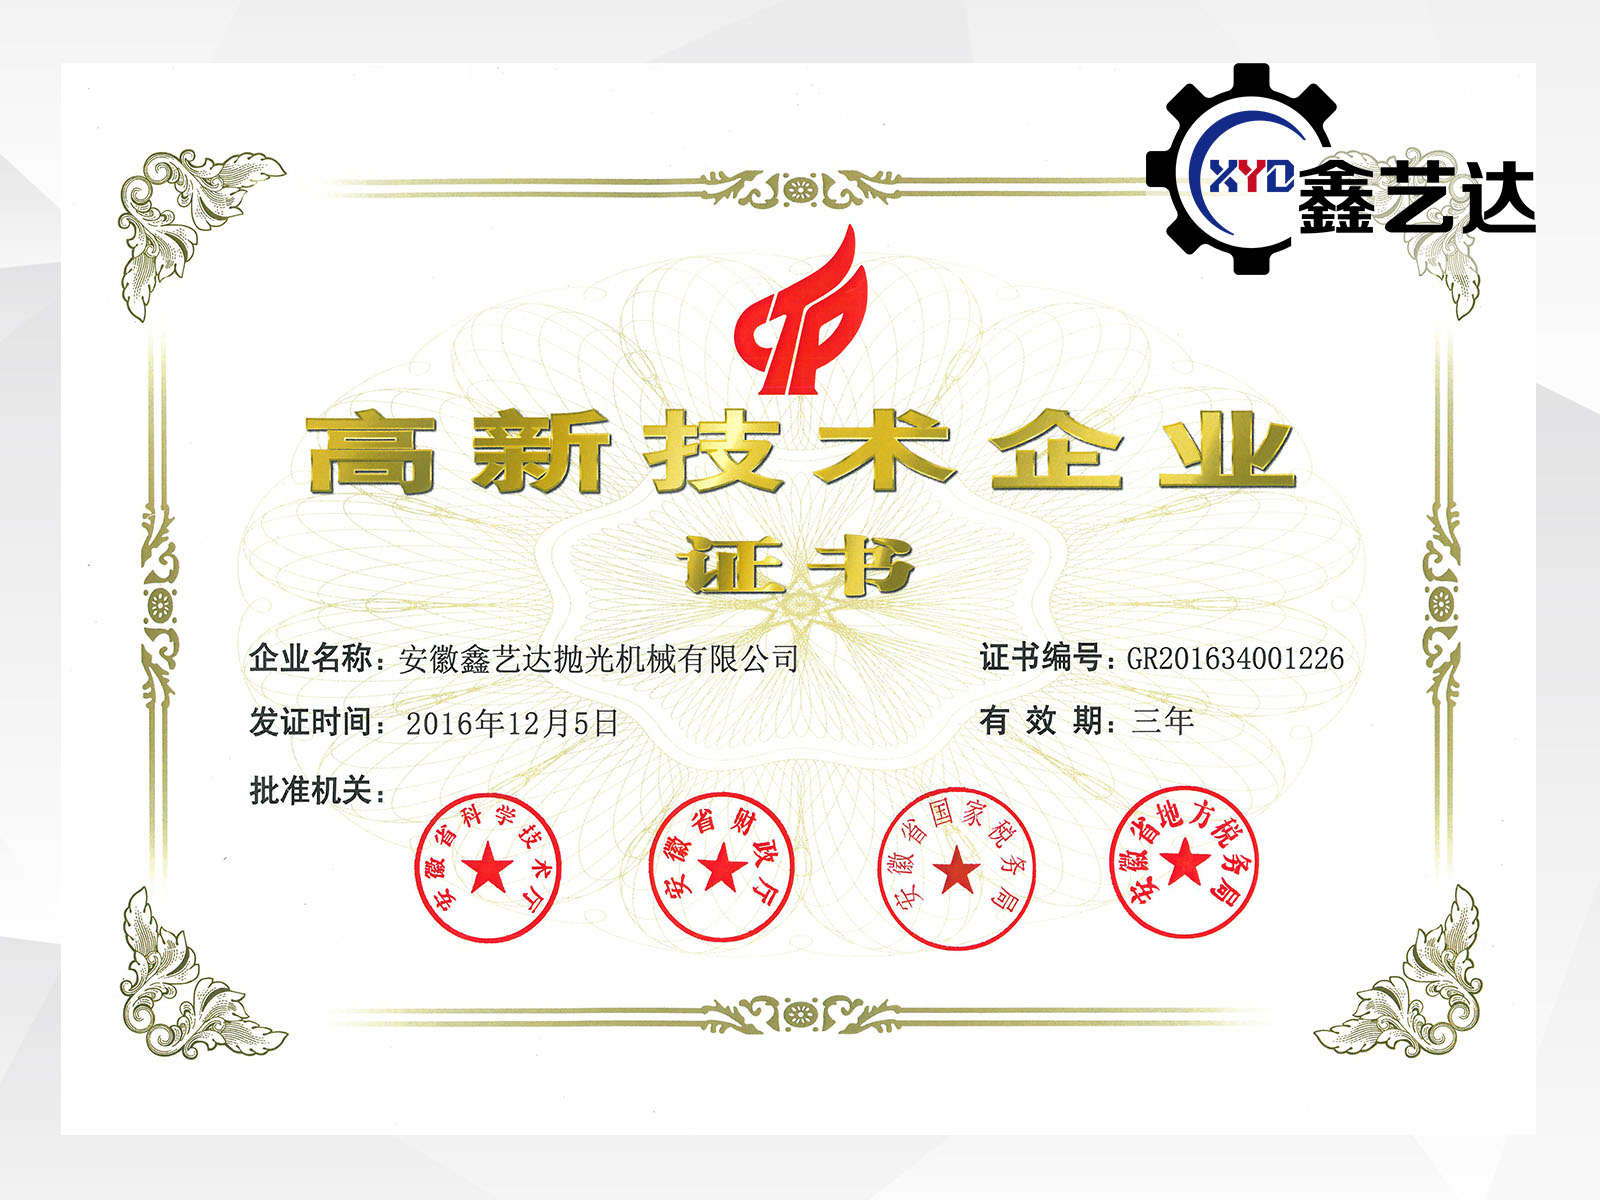 Anhui Xinyida Polishing Machinery Co., Ltd. has been recognized by the “National High-tech Enterpri